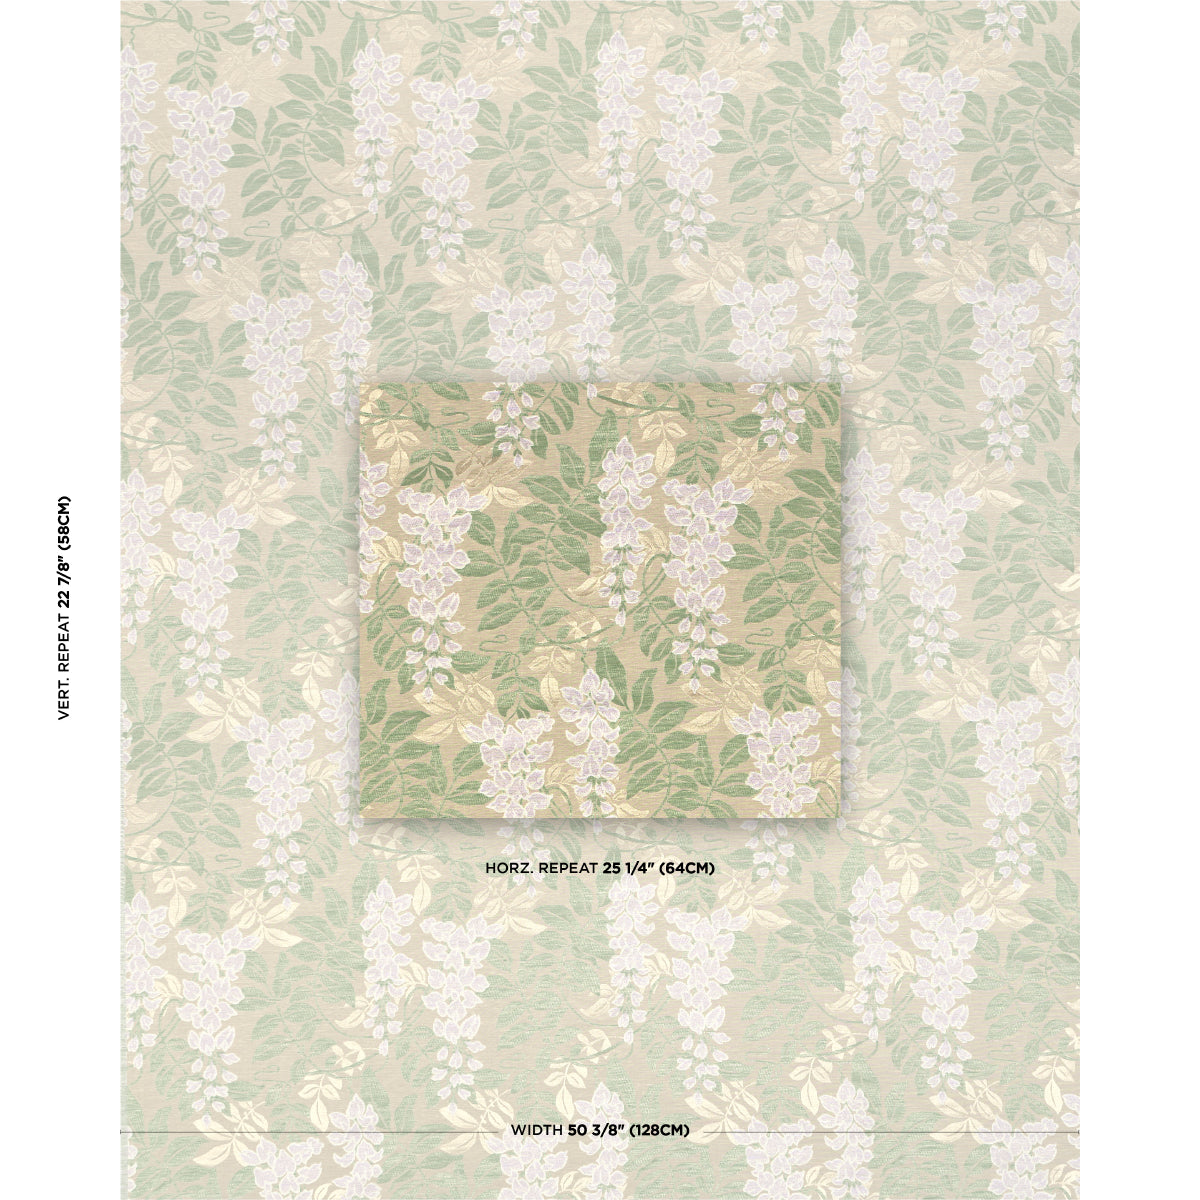 Purchase 83900 | Lucia Wisteria, Lilac - Schumacher Fabric